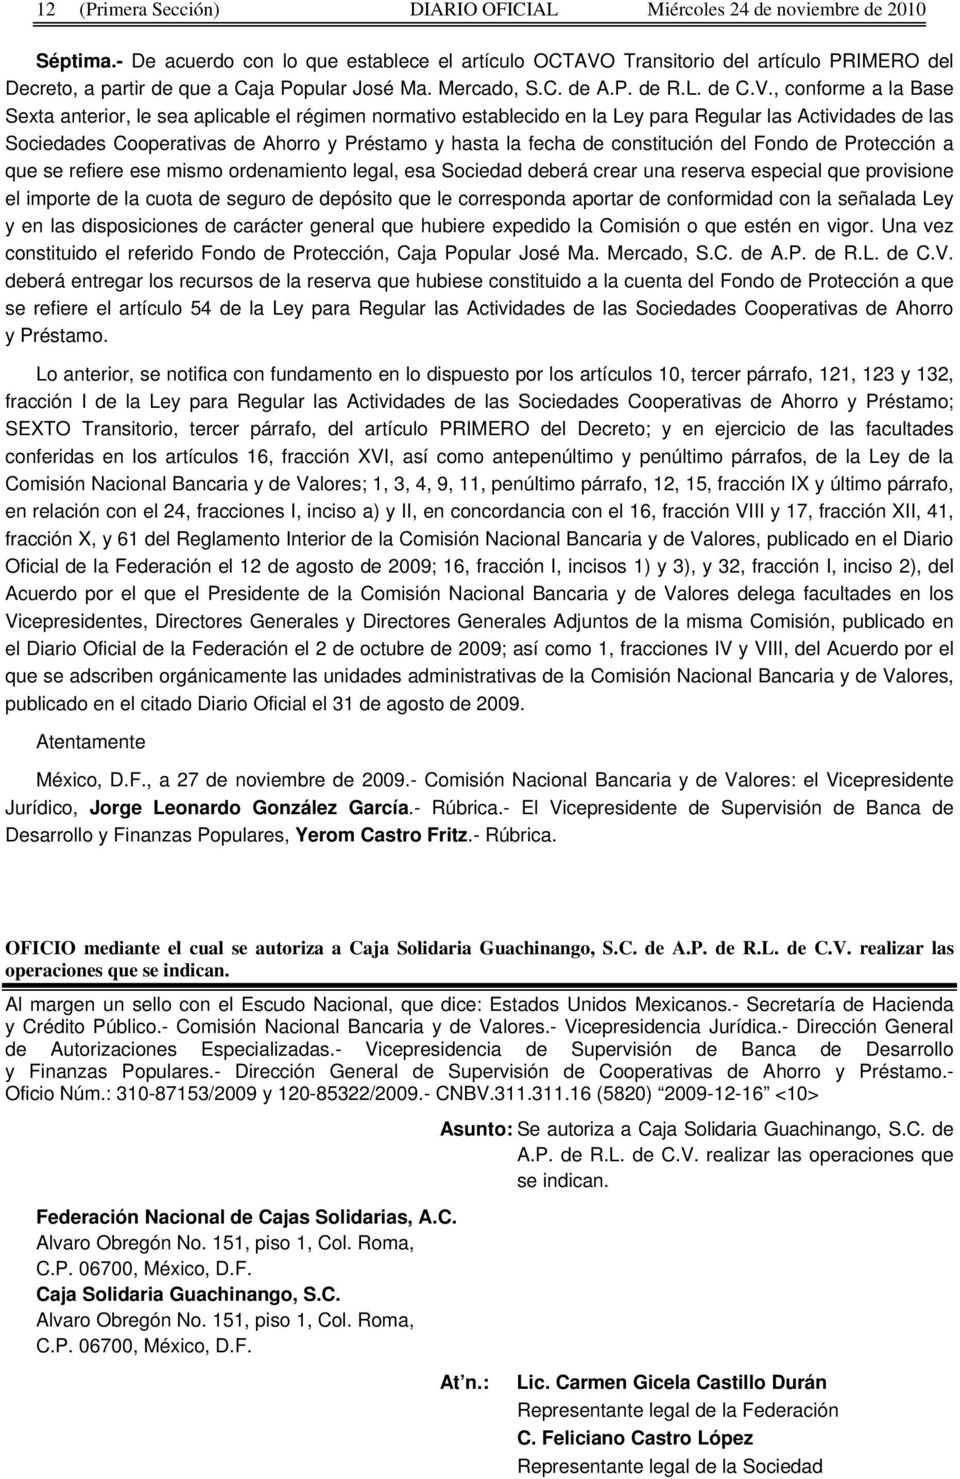 Transitorio del artículo PRIMERO del Decreto, a partir de que a Caja Popular José Ma. Mercado, S.C. de A.P. de R.L. de C.V.